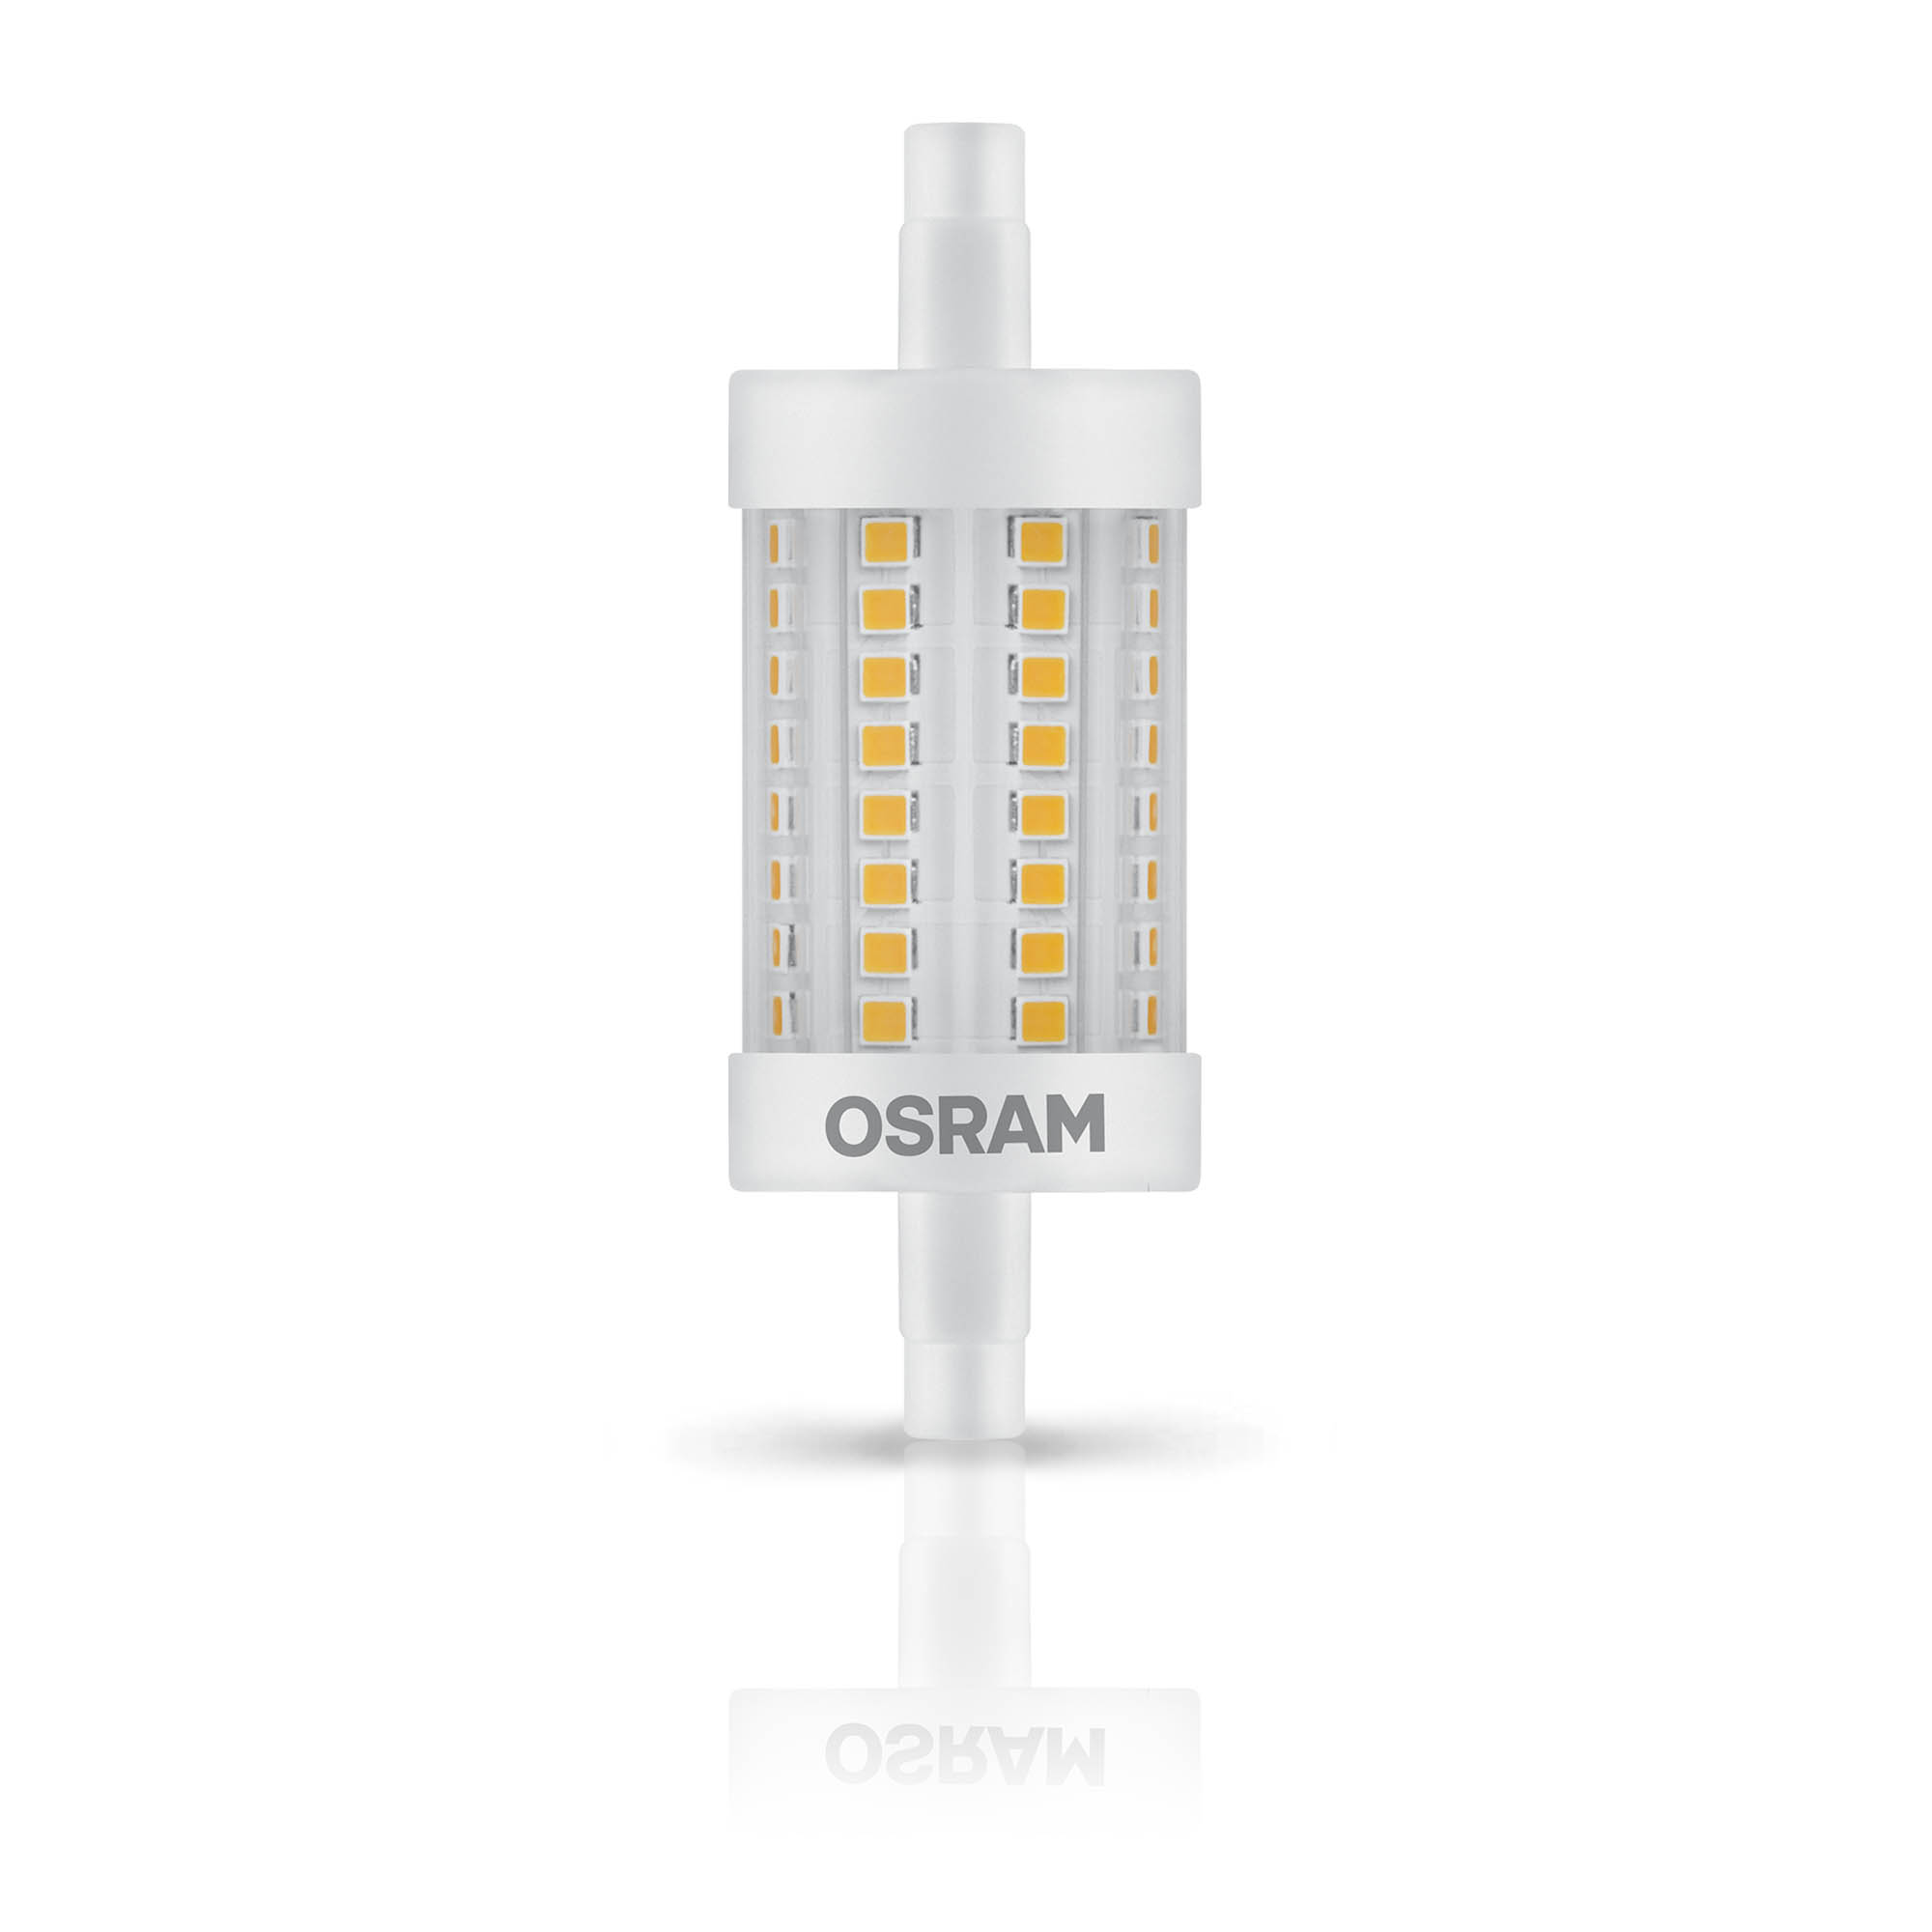 Osram LED STAR  LINE 78  HS 60 non-dim  7W 827 R7S 78mm 806lm 2700K